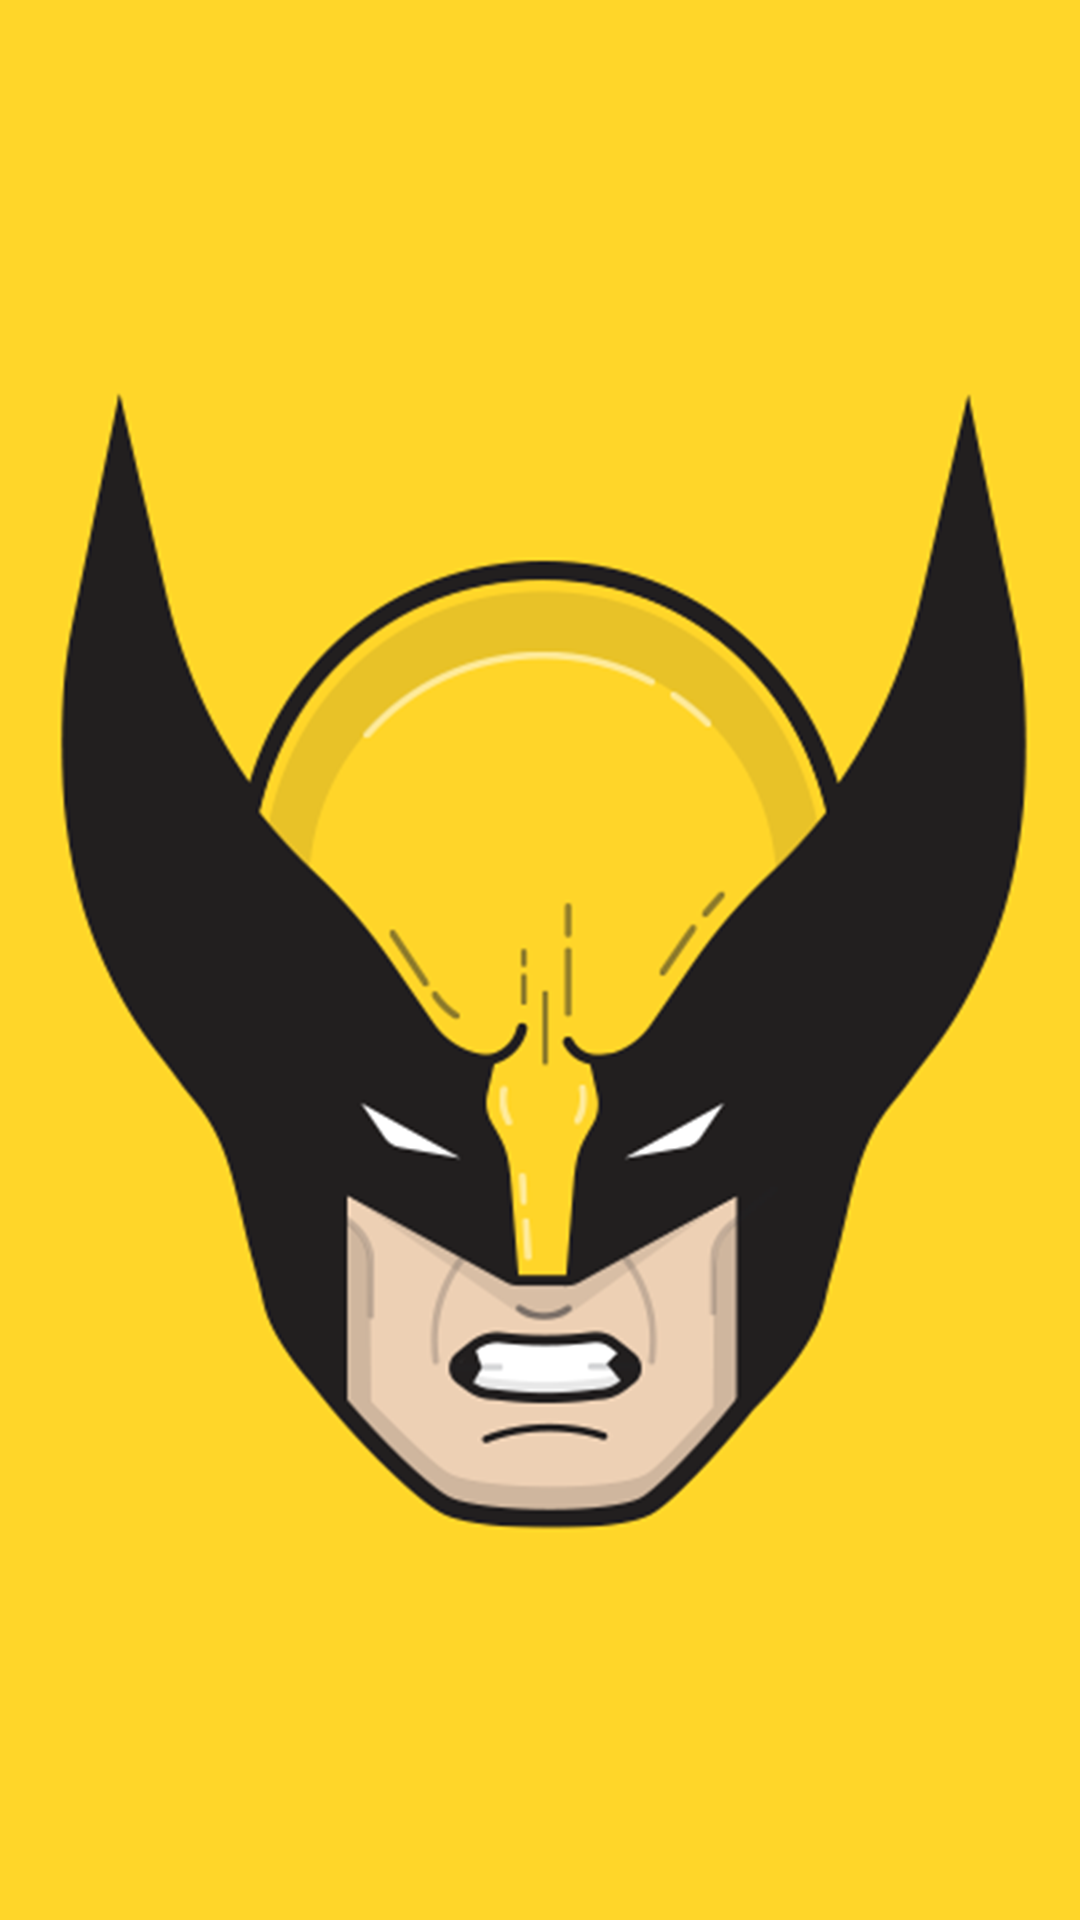 General 1080x1920 Wolverine simple background yellow background minimalism X-Men comic art